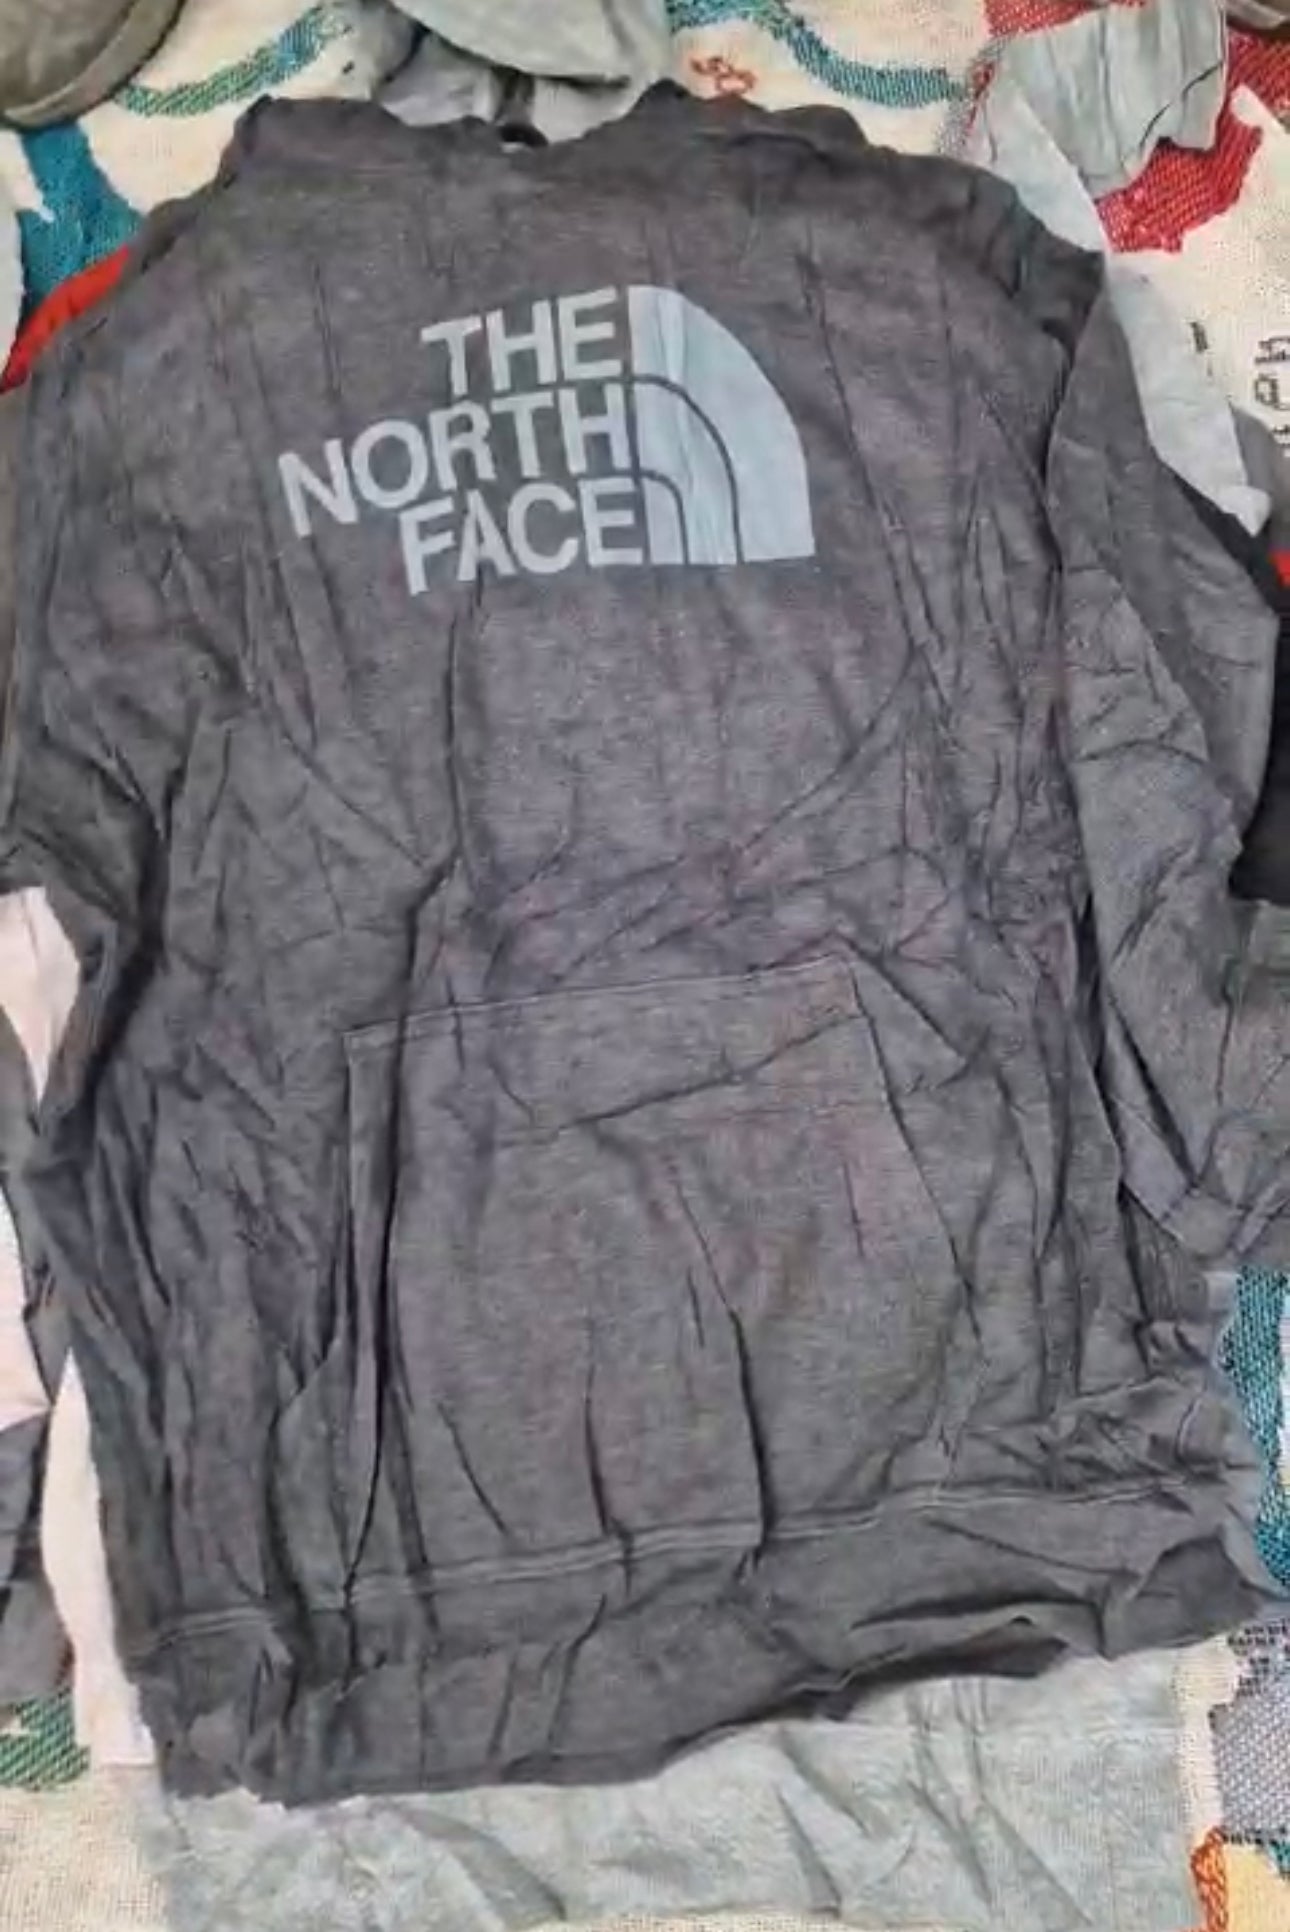 Vintage Northface Sweatshirts and Hoodies Mix 45kg Bale